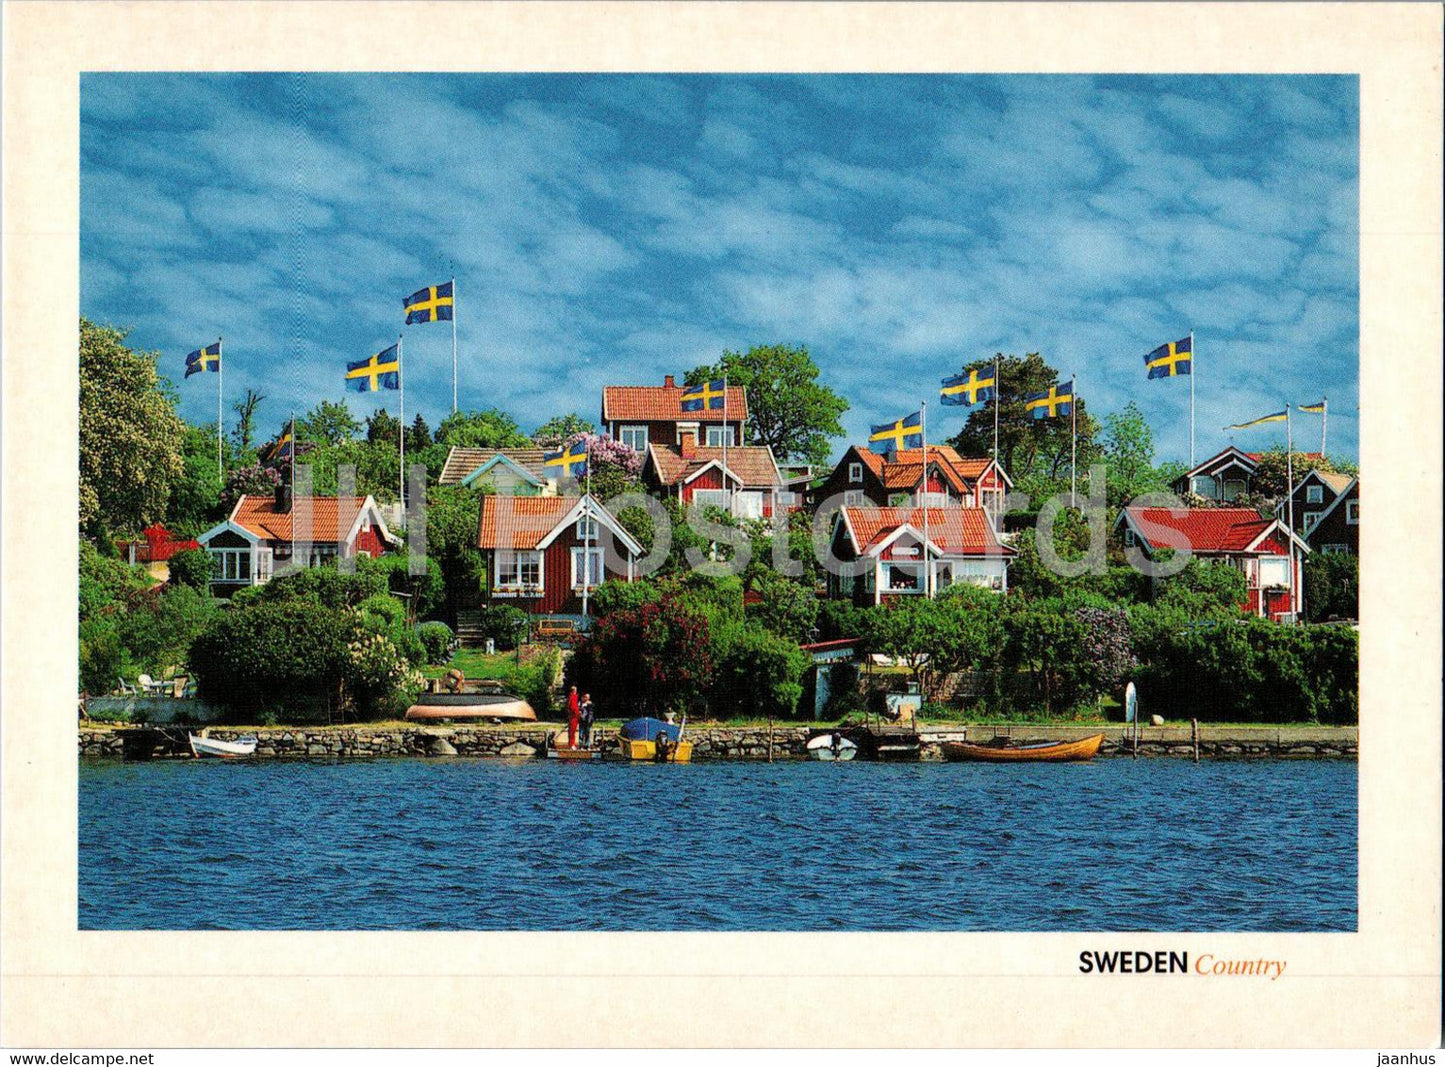 Sweden Country - Sweden - unused - JH Postcards